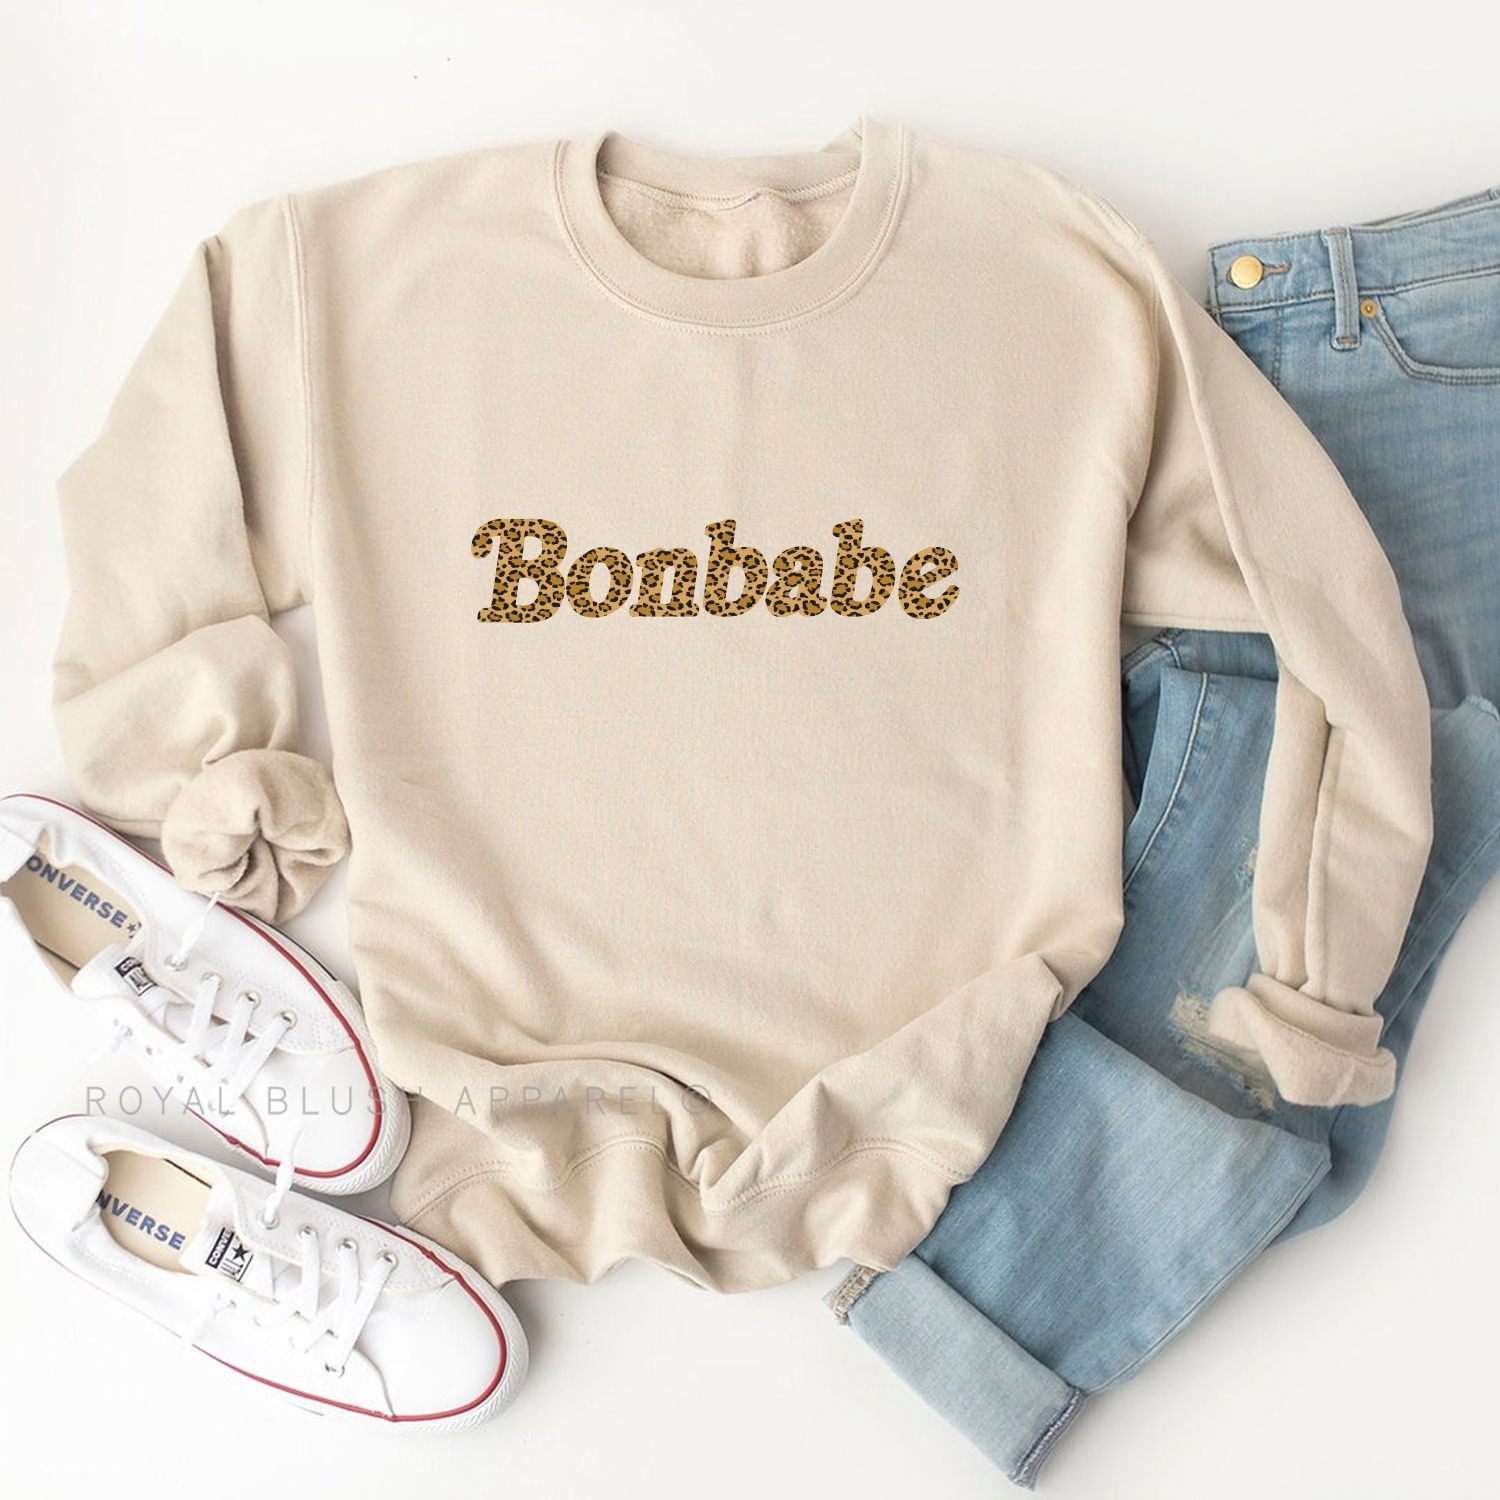 Bonbabe Leopard Sweatshirt